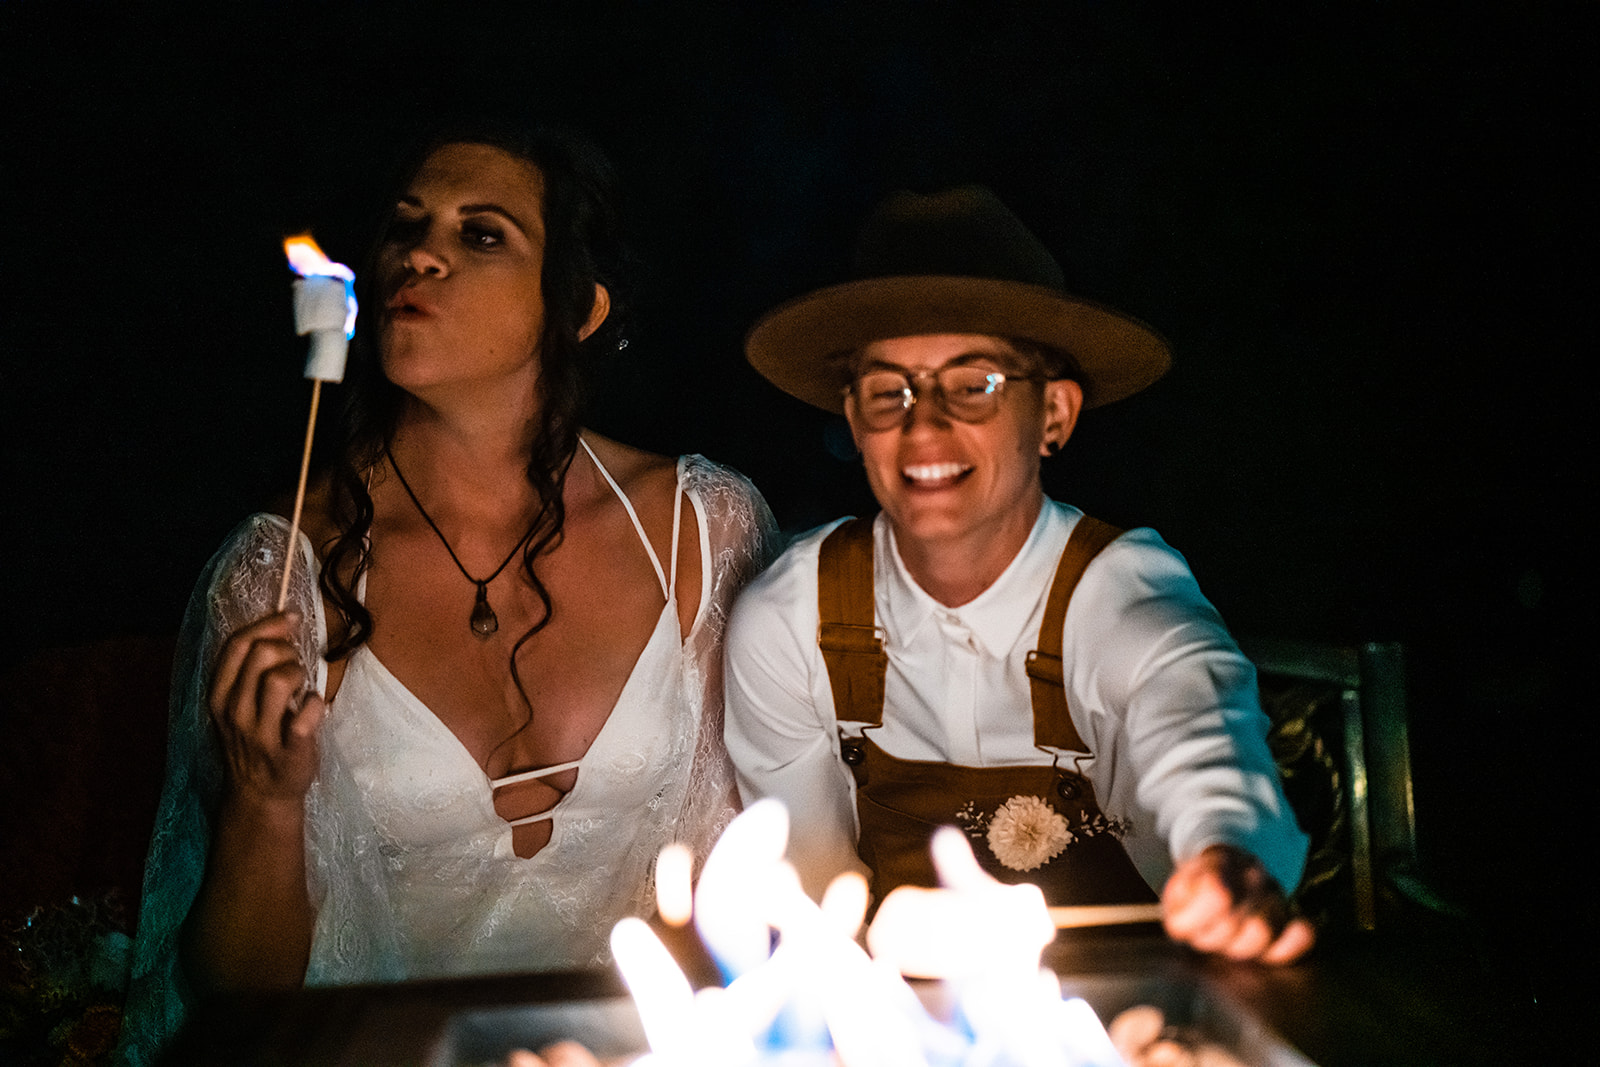 Lesbian couple making S'mores as their wedding ritual